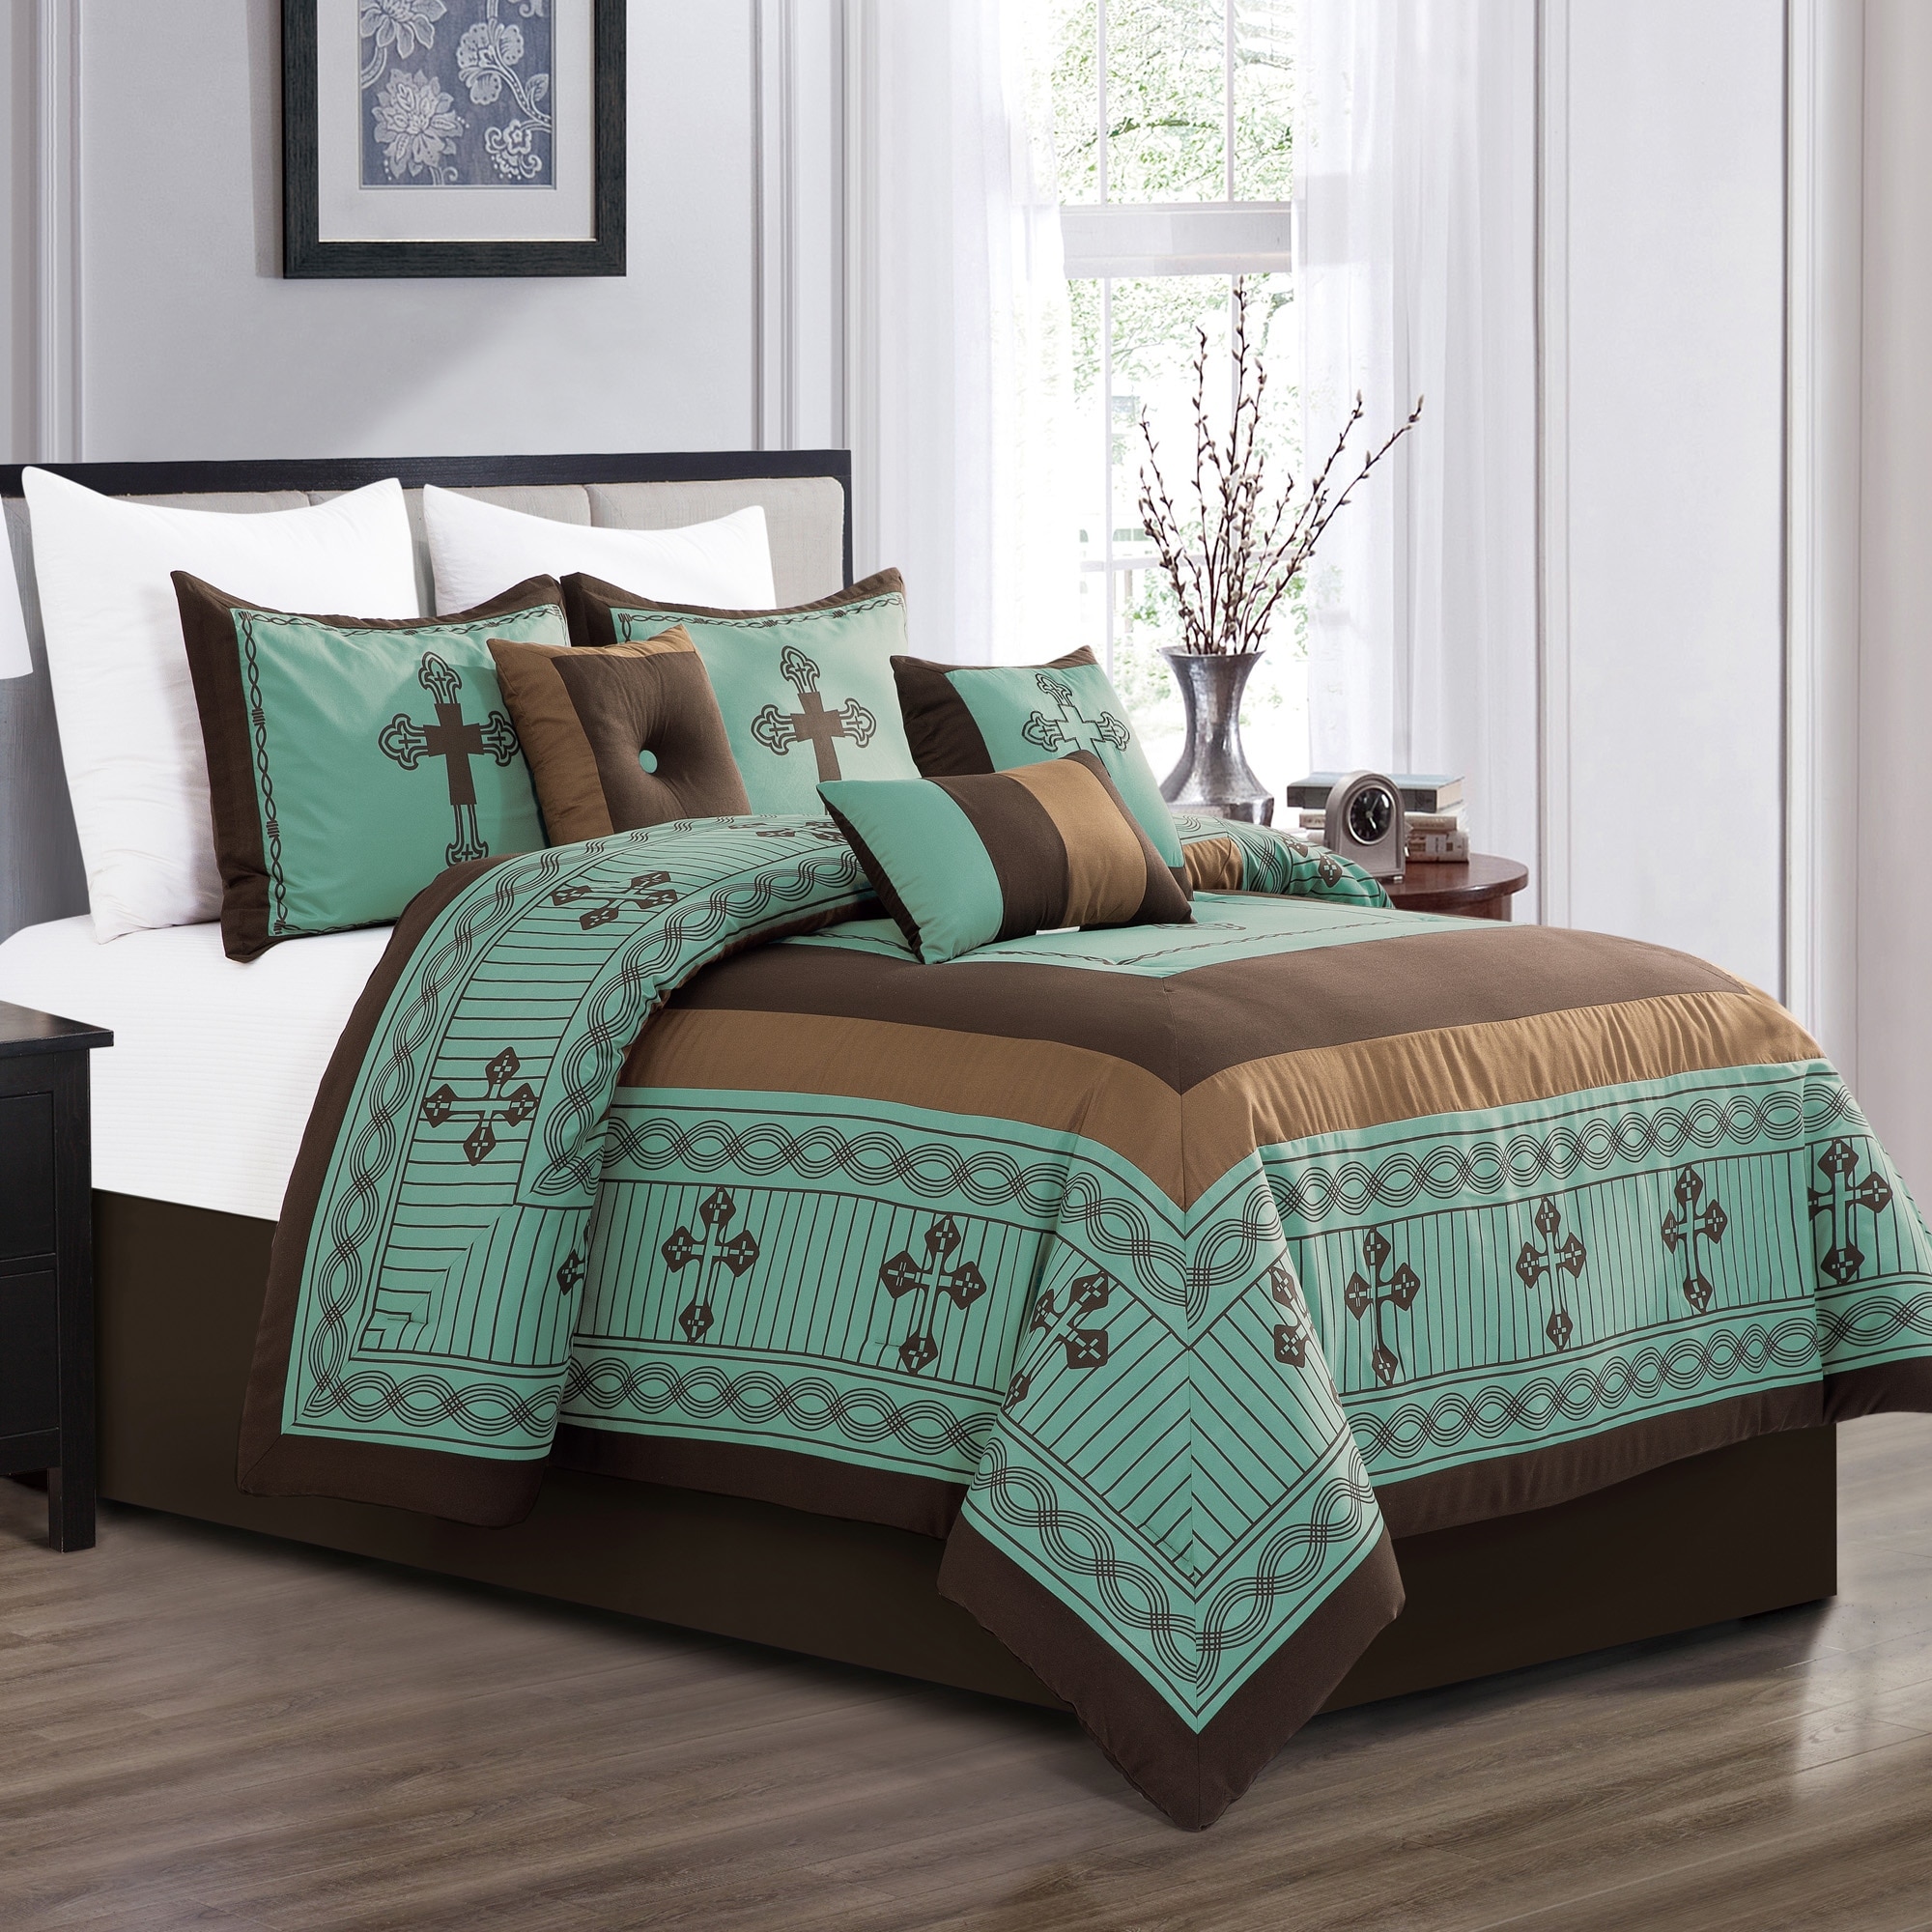 Texas Praying Cowboy Cross Western Quilt Bedspread Comforter 3 Pcs Oversize Set 